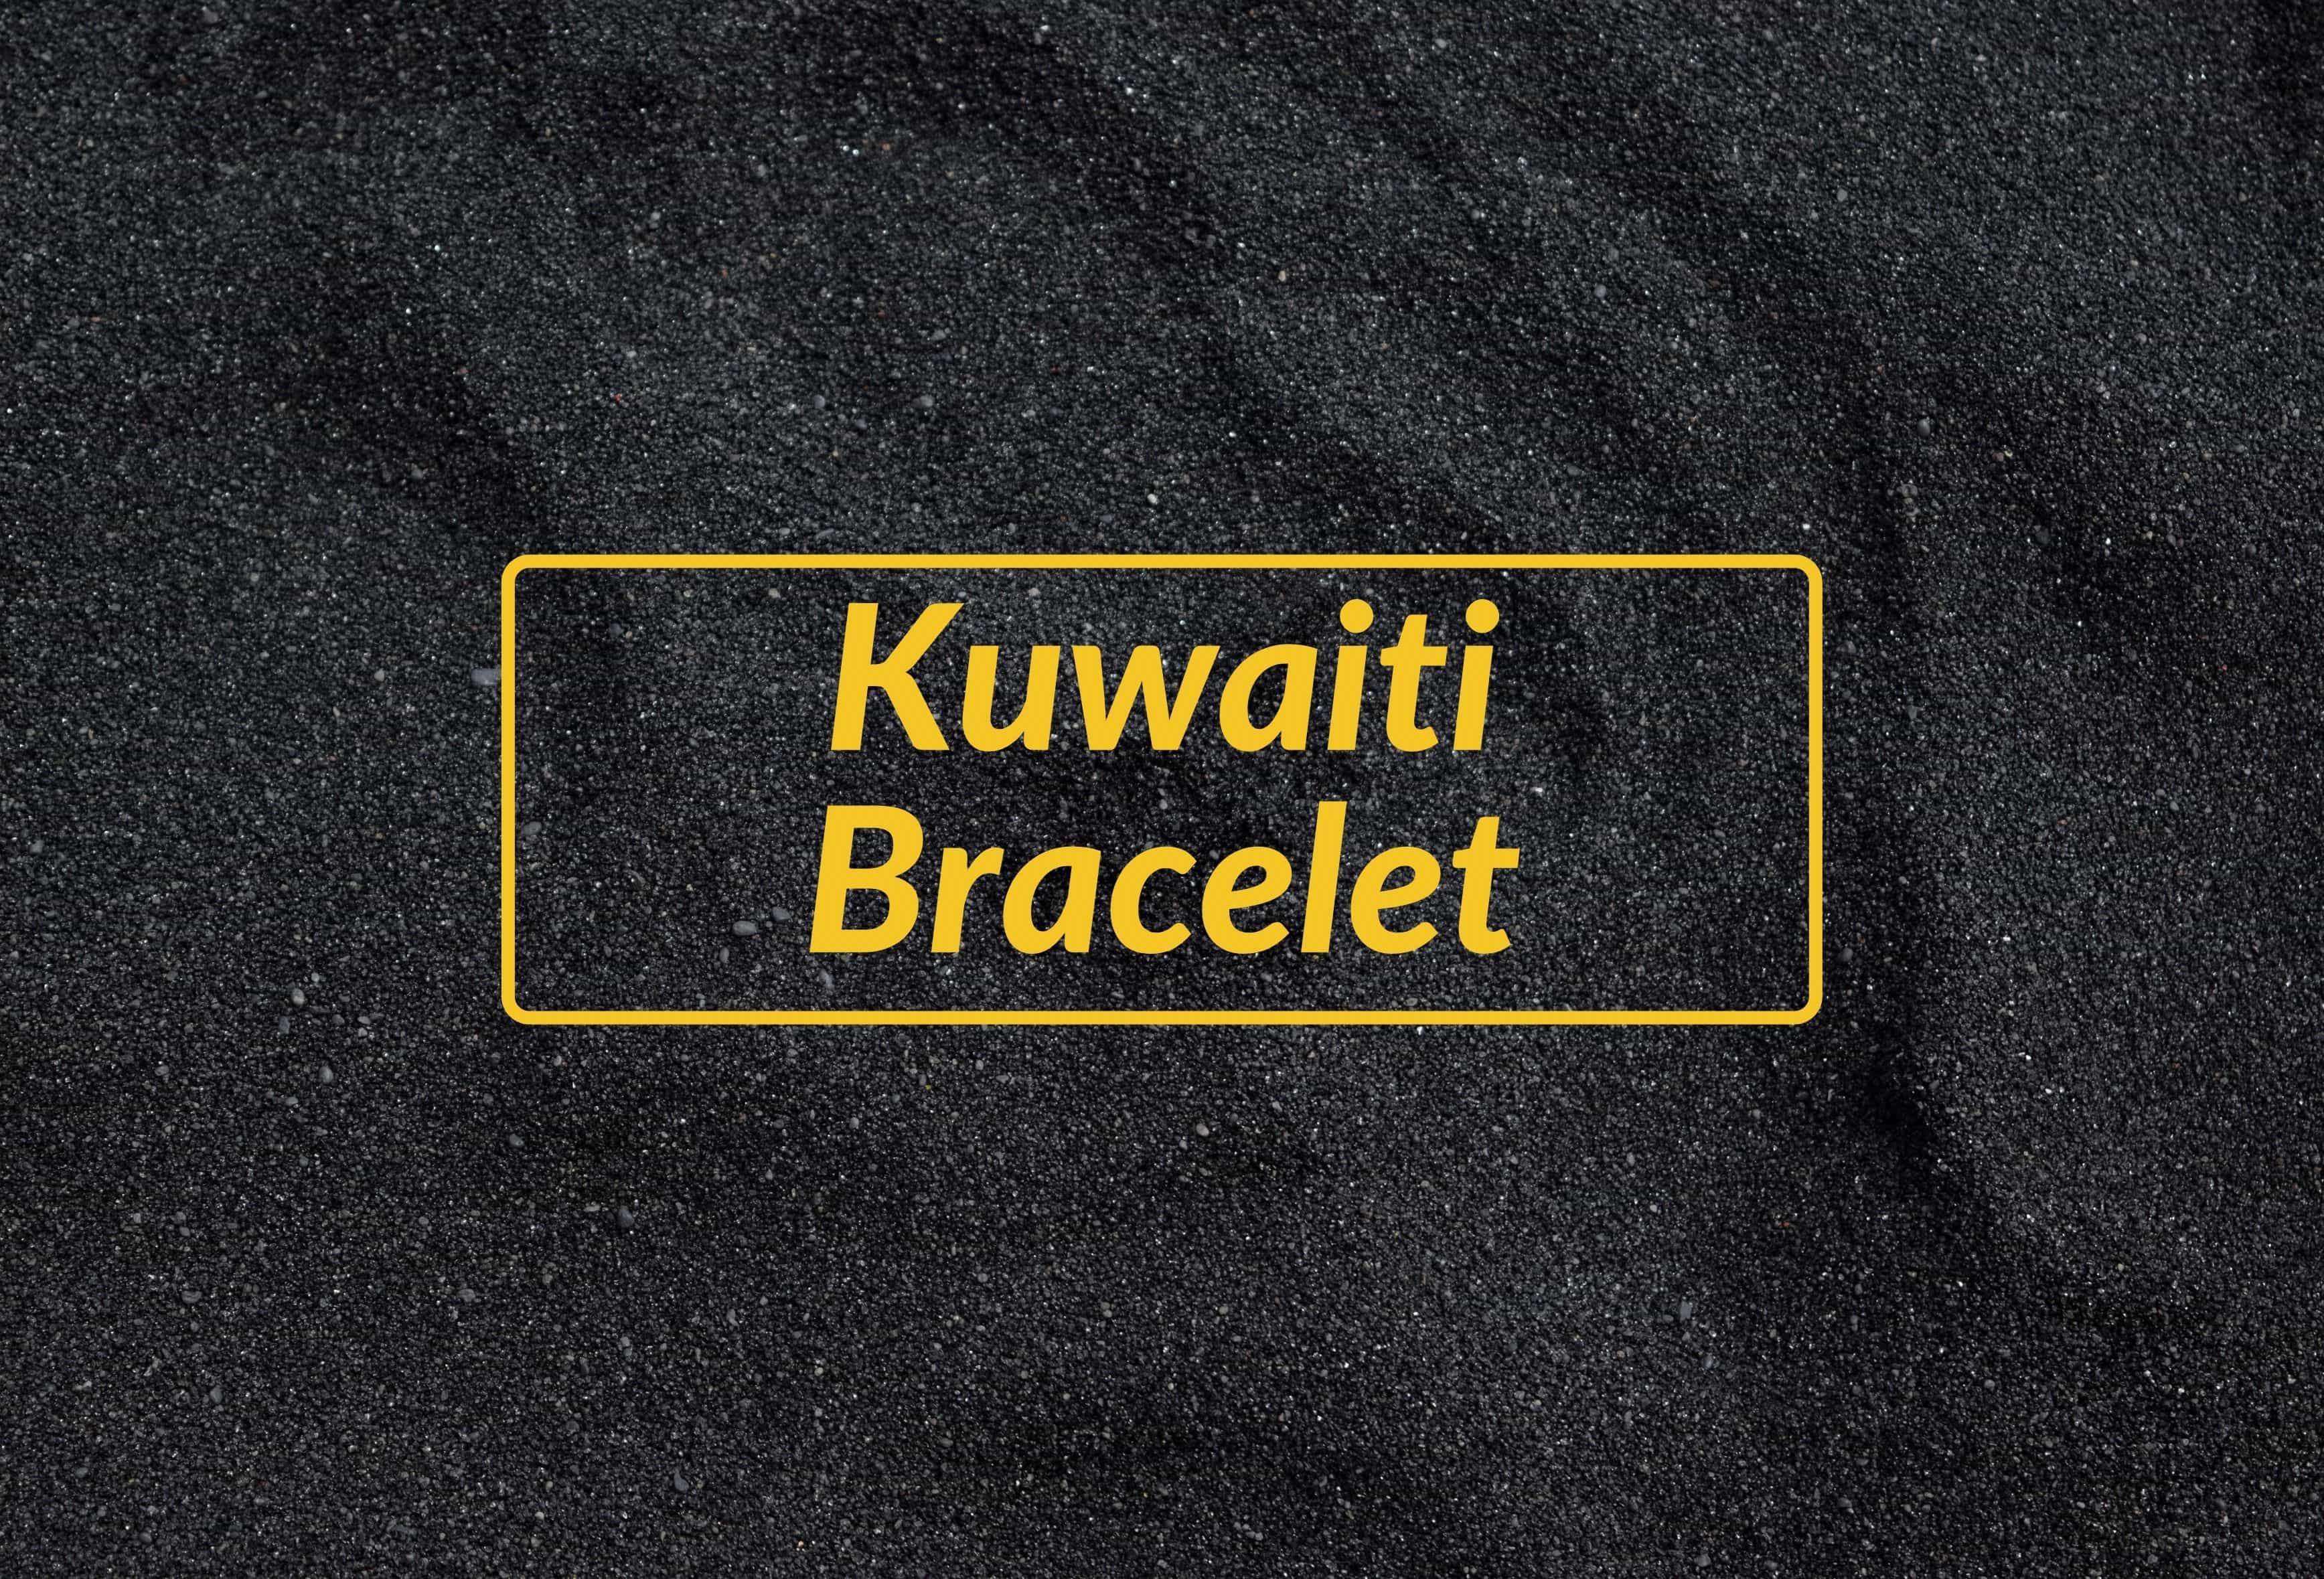 Kuwaiti Bracelet